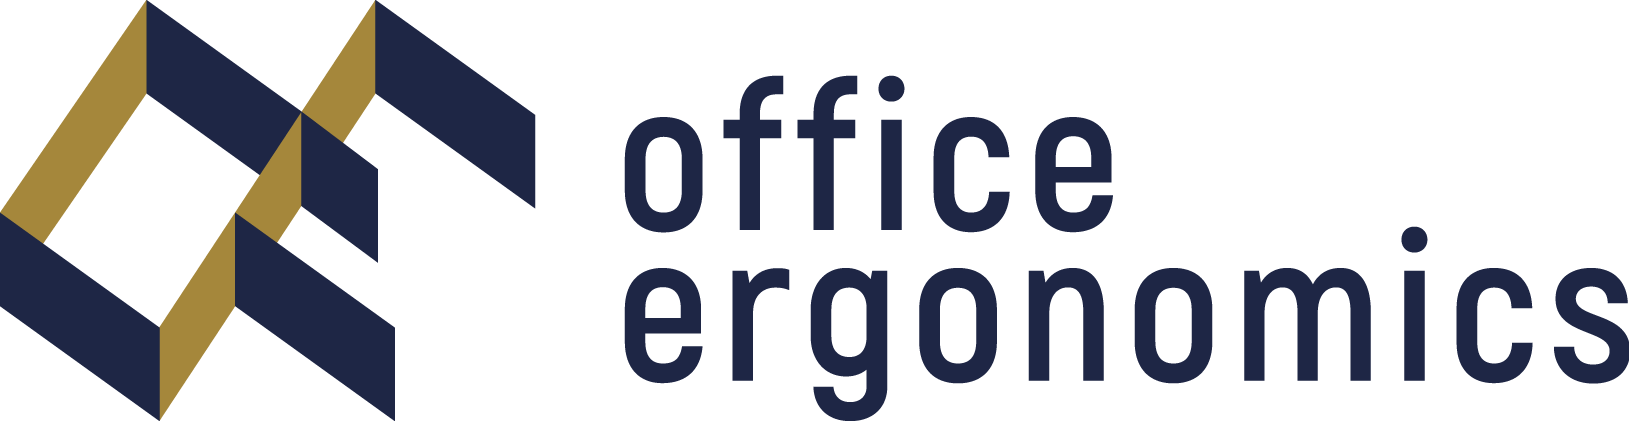 Office Ergonomics, LLC